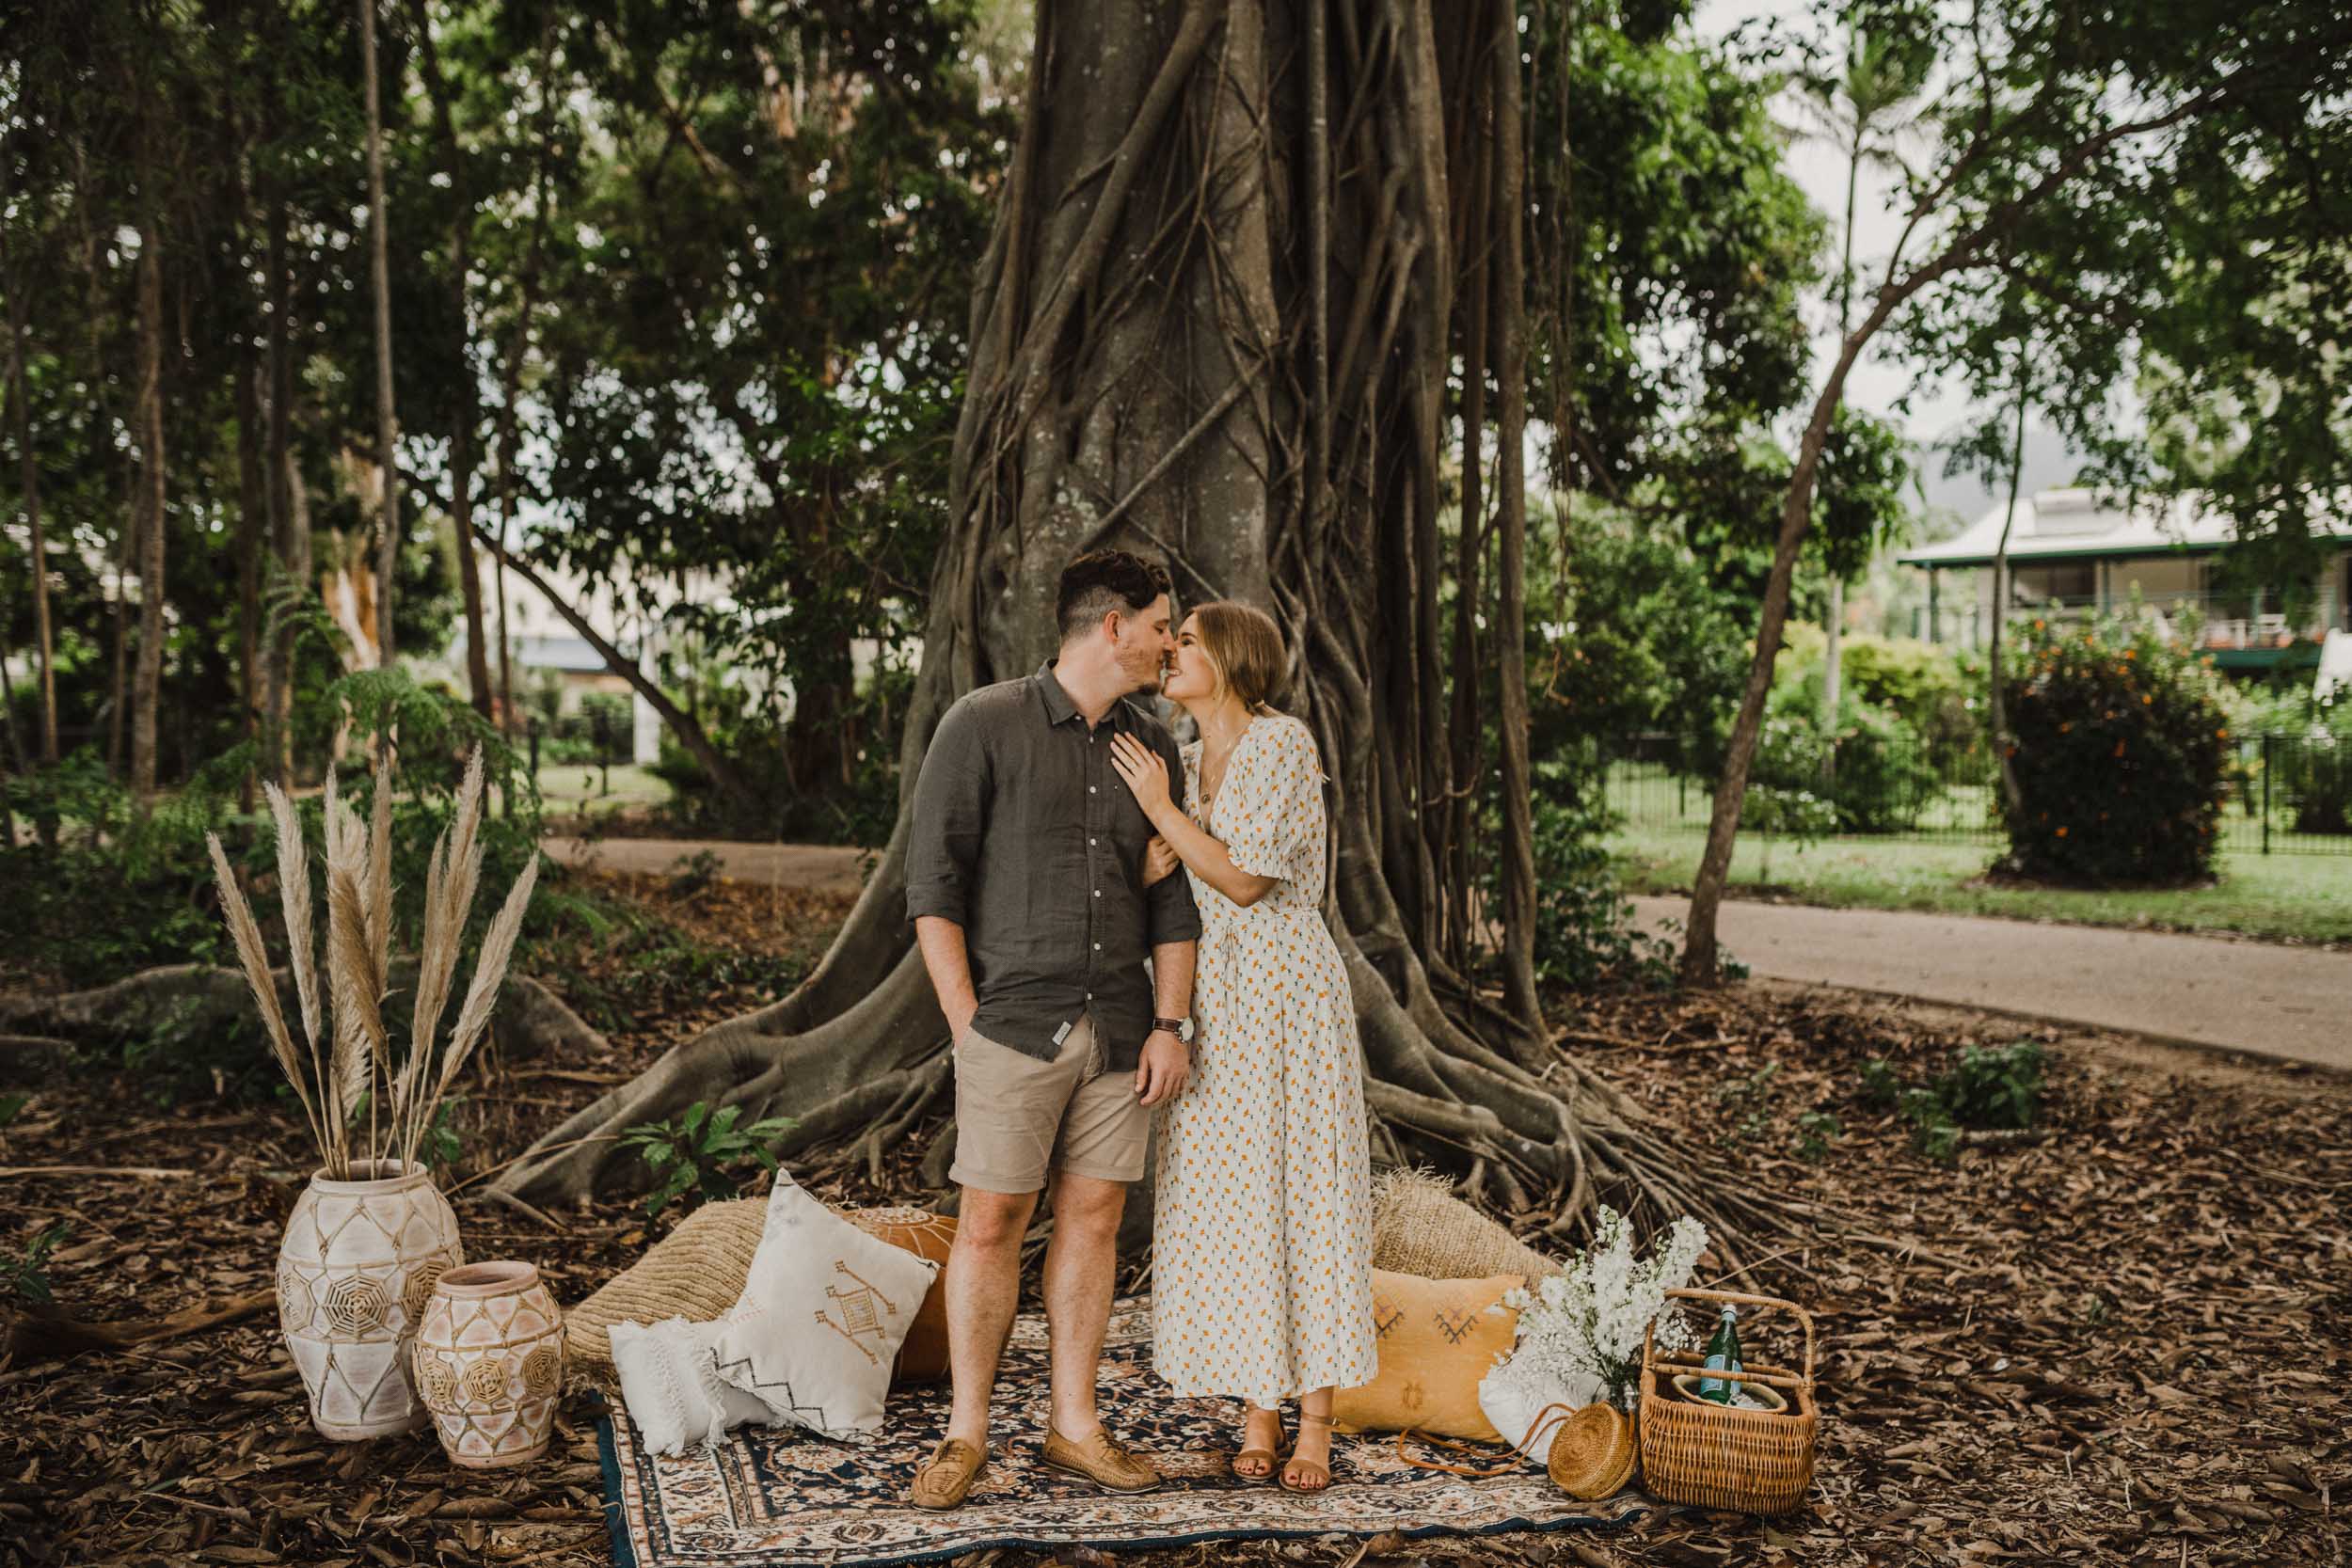 The Raw Photographer - Cairns Wedding Photographer - Beach Engagement Shoot - Candid Picnic-23.jpg